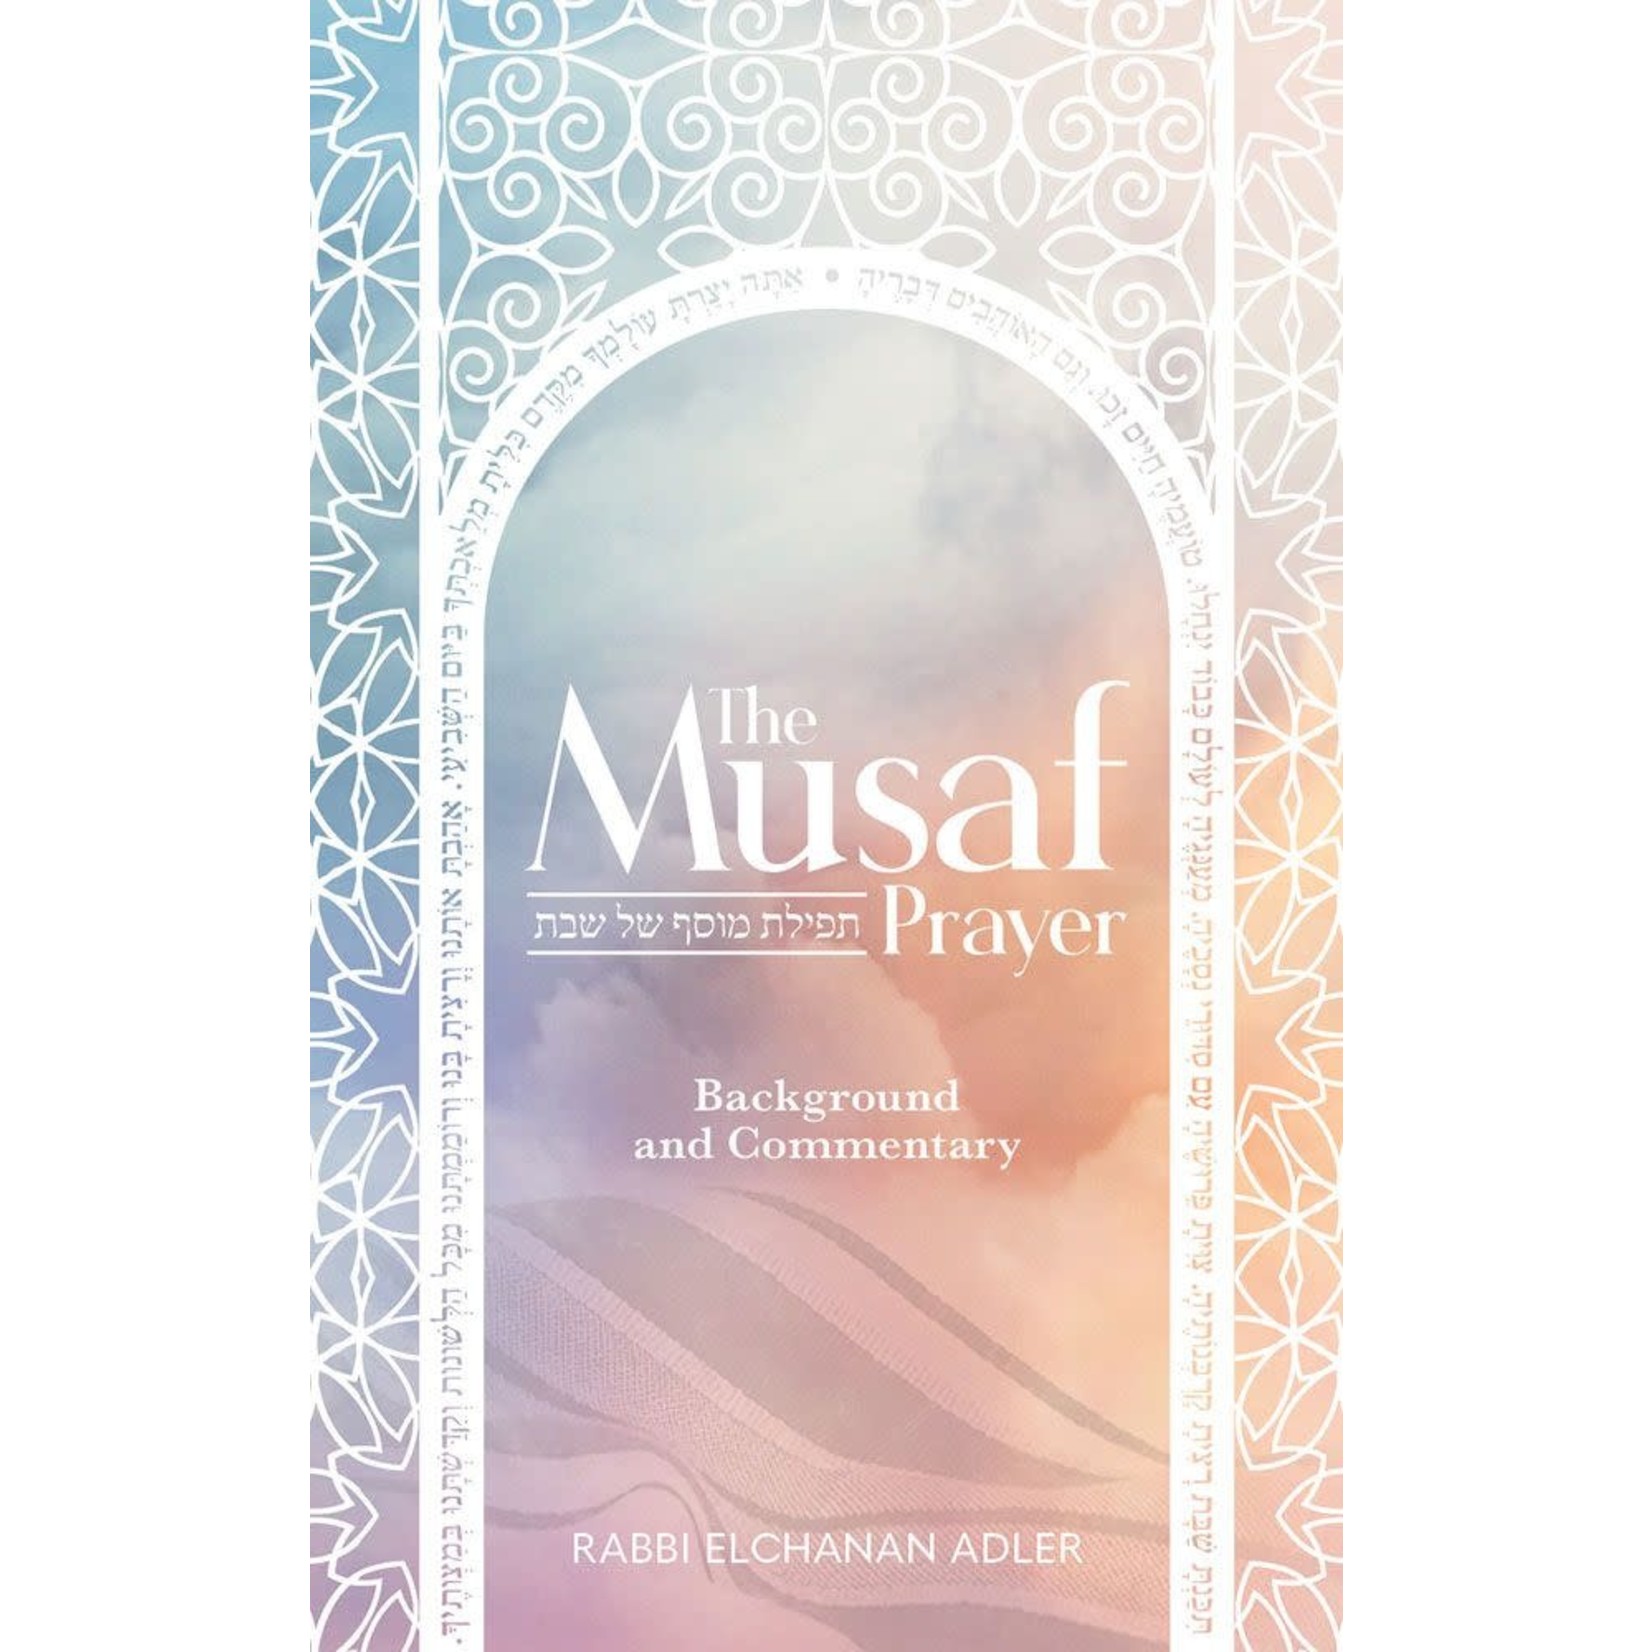 The Musaf Prayer